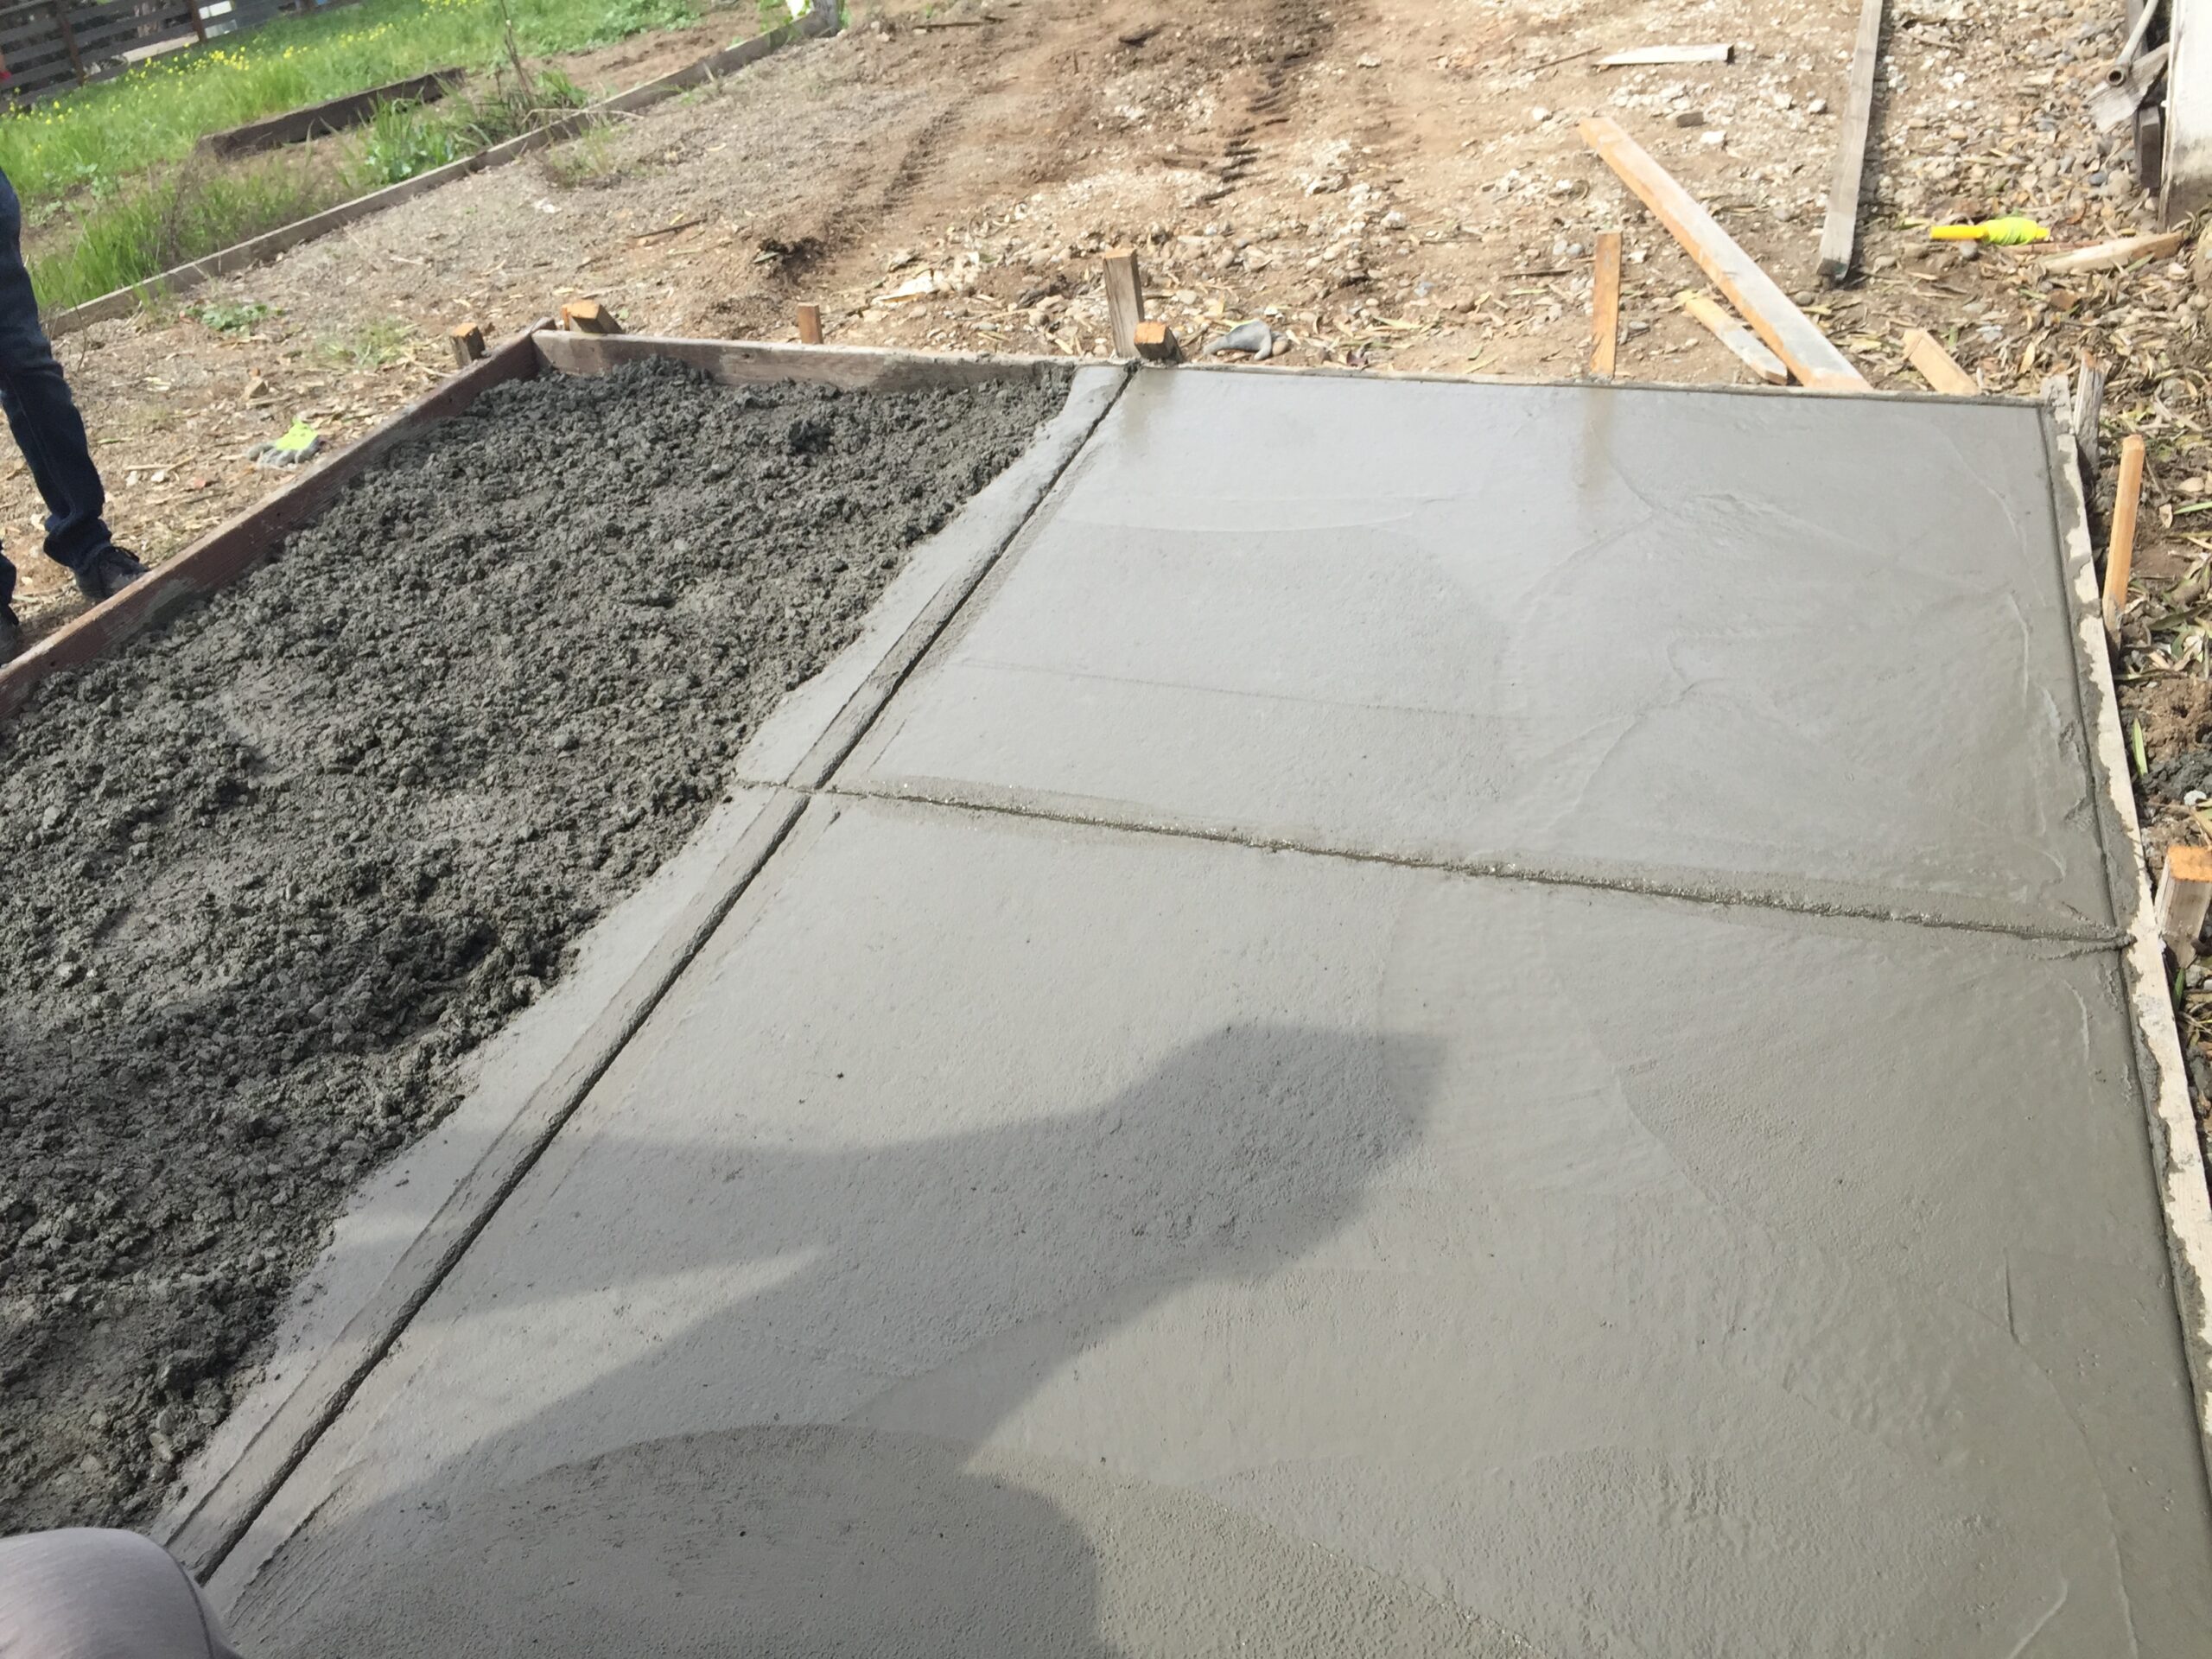 New concrete pad